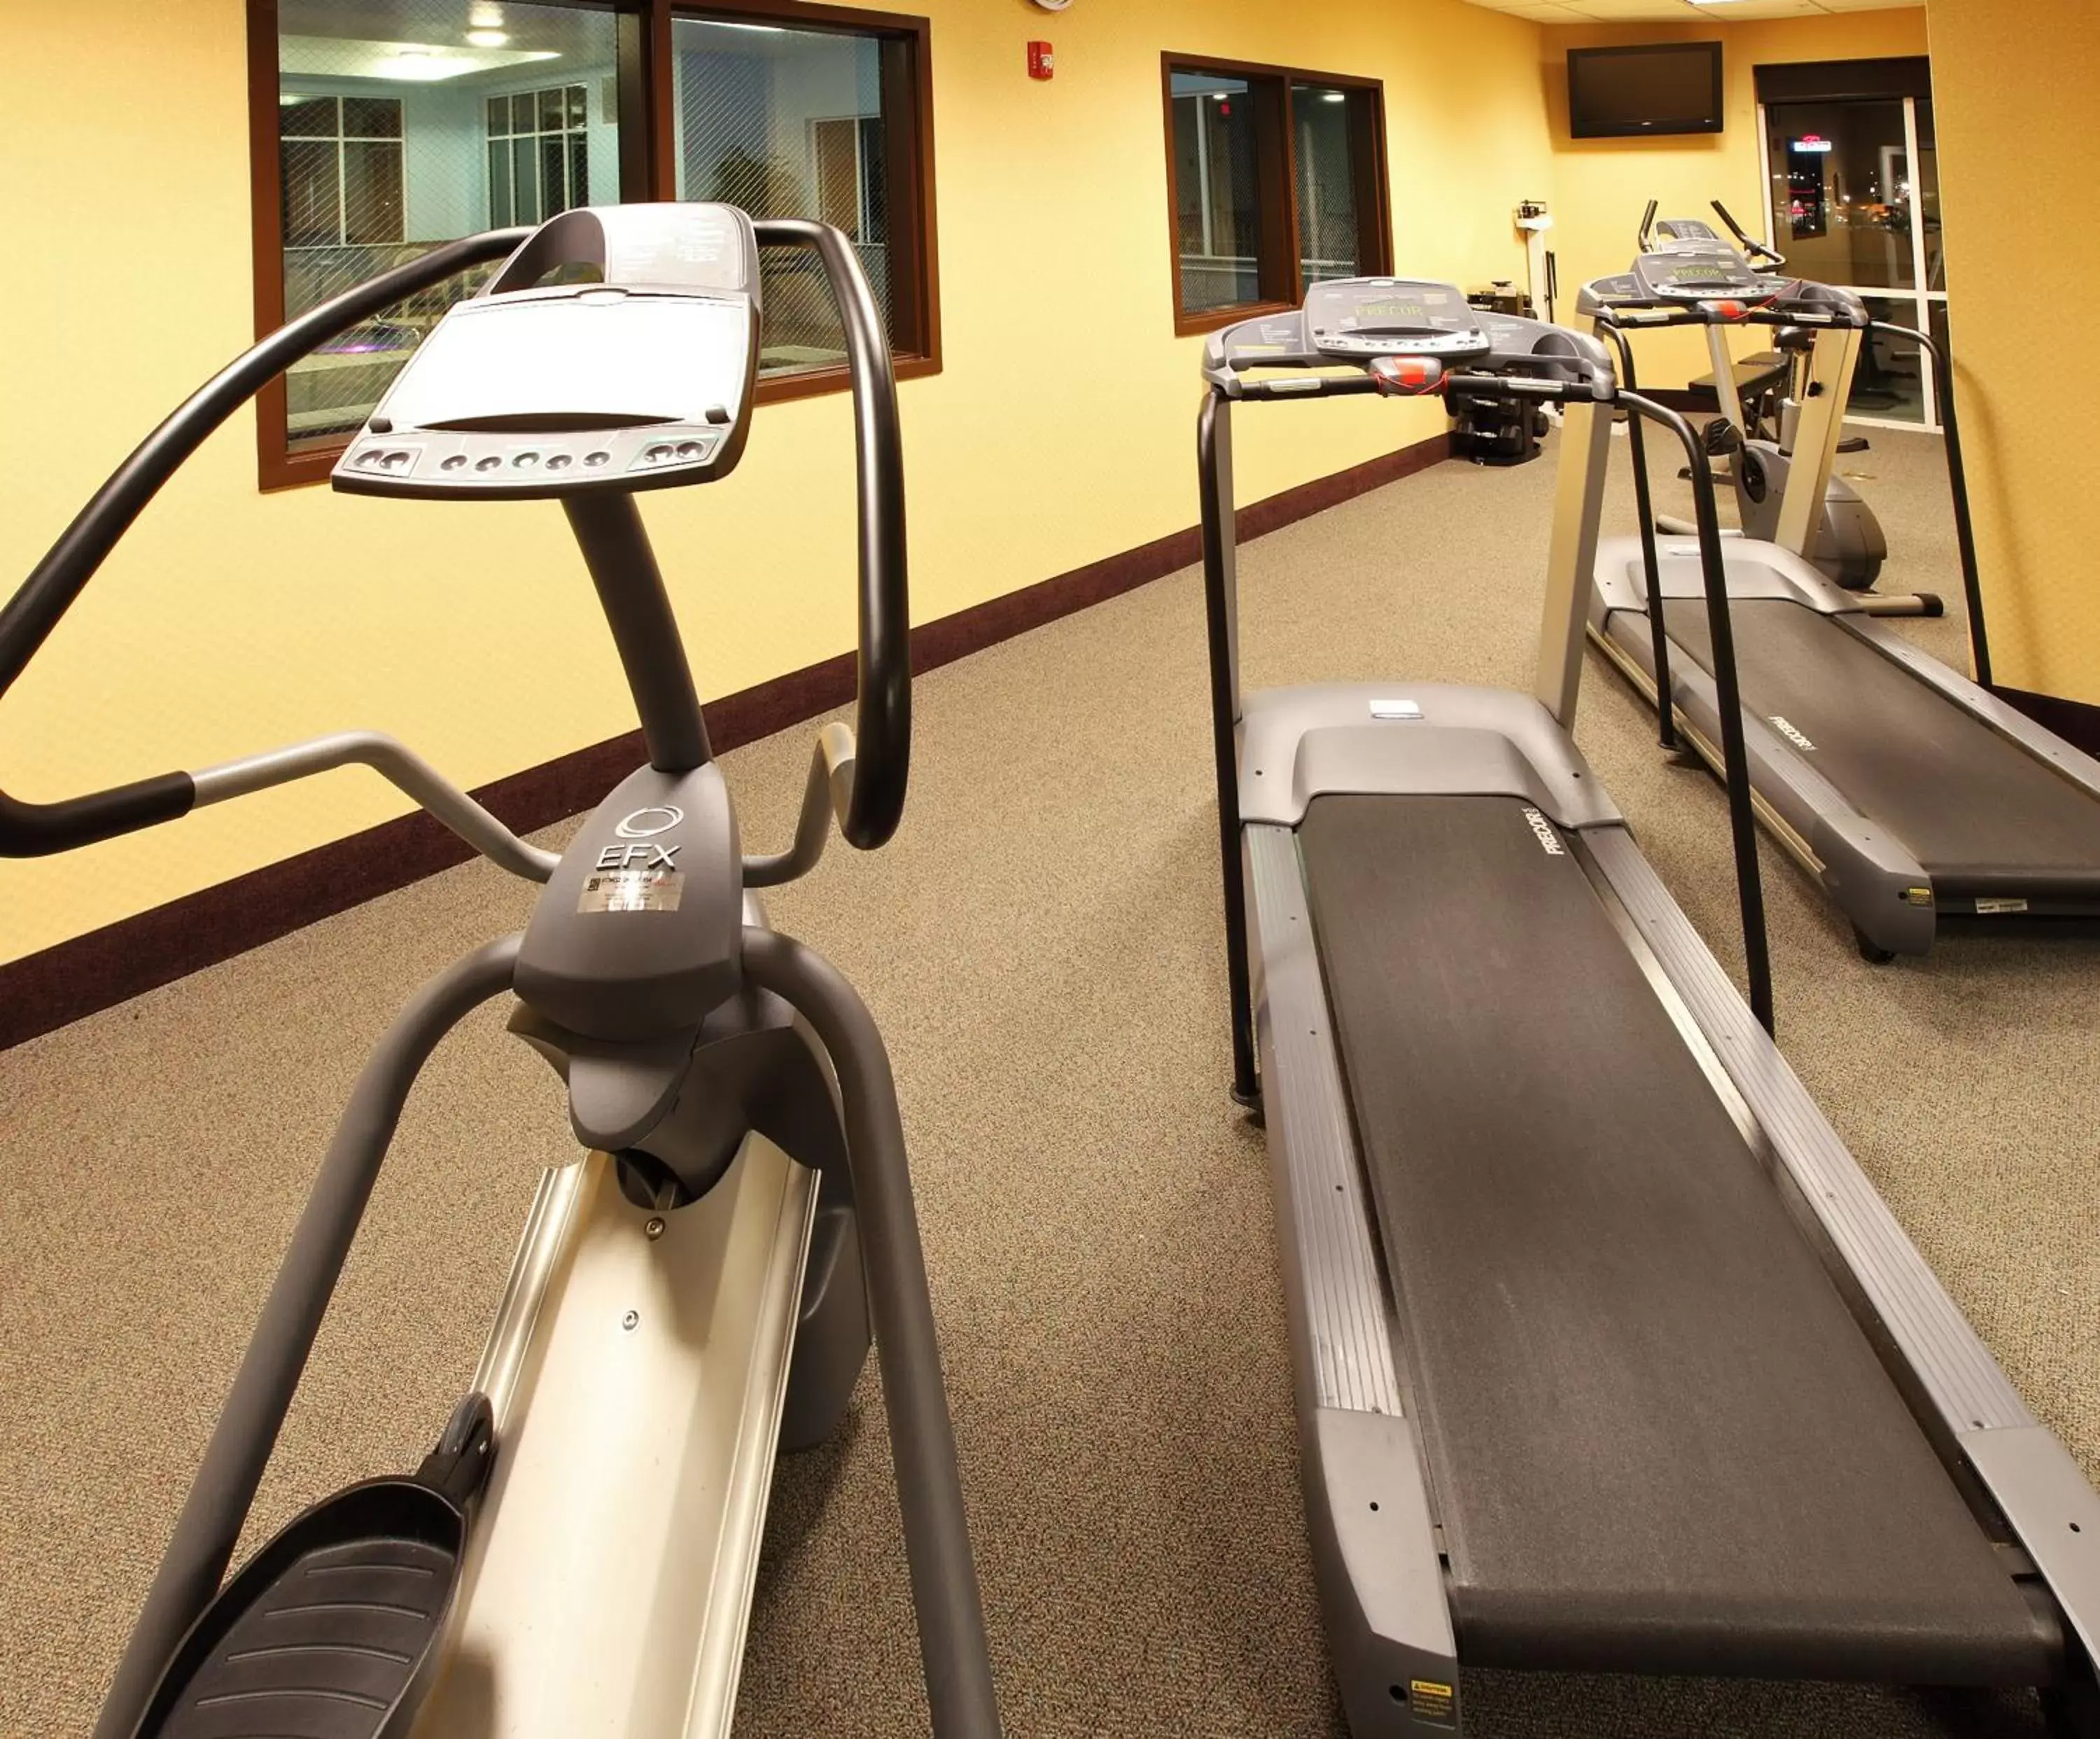 Fitness centre/facilities, Fitness Center/Facilities in Hyatt House Bentonville Rogers